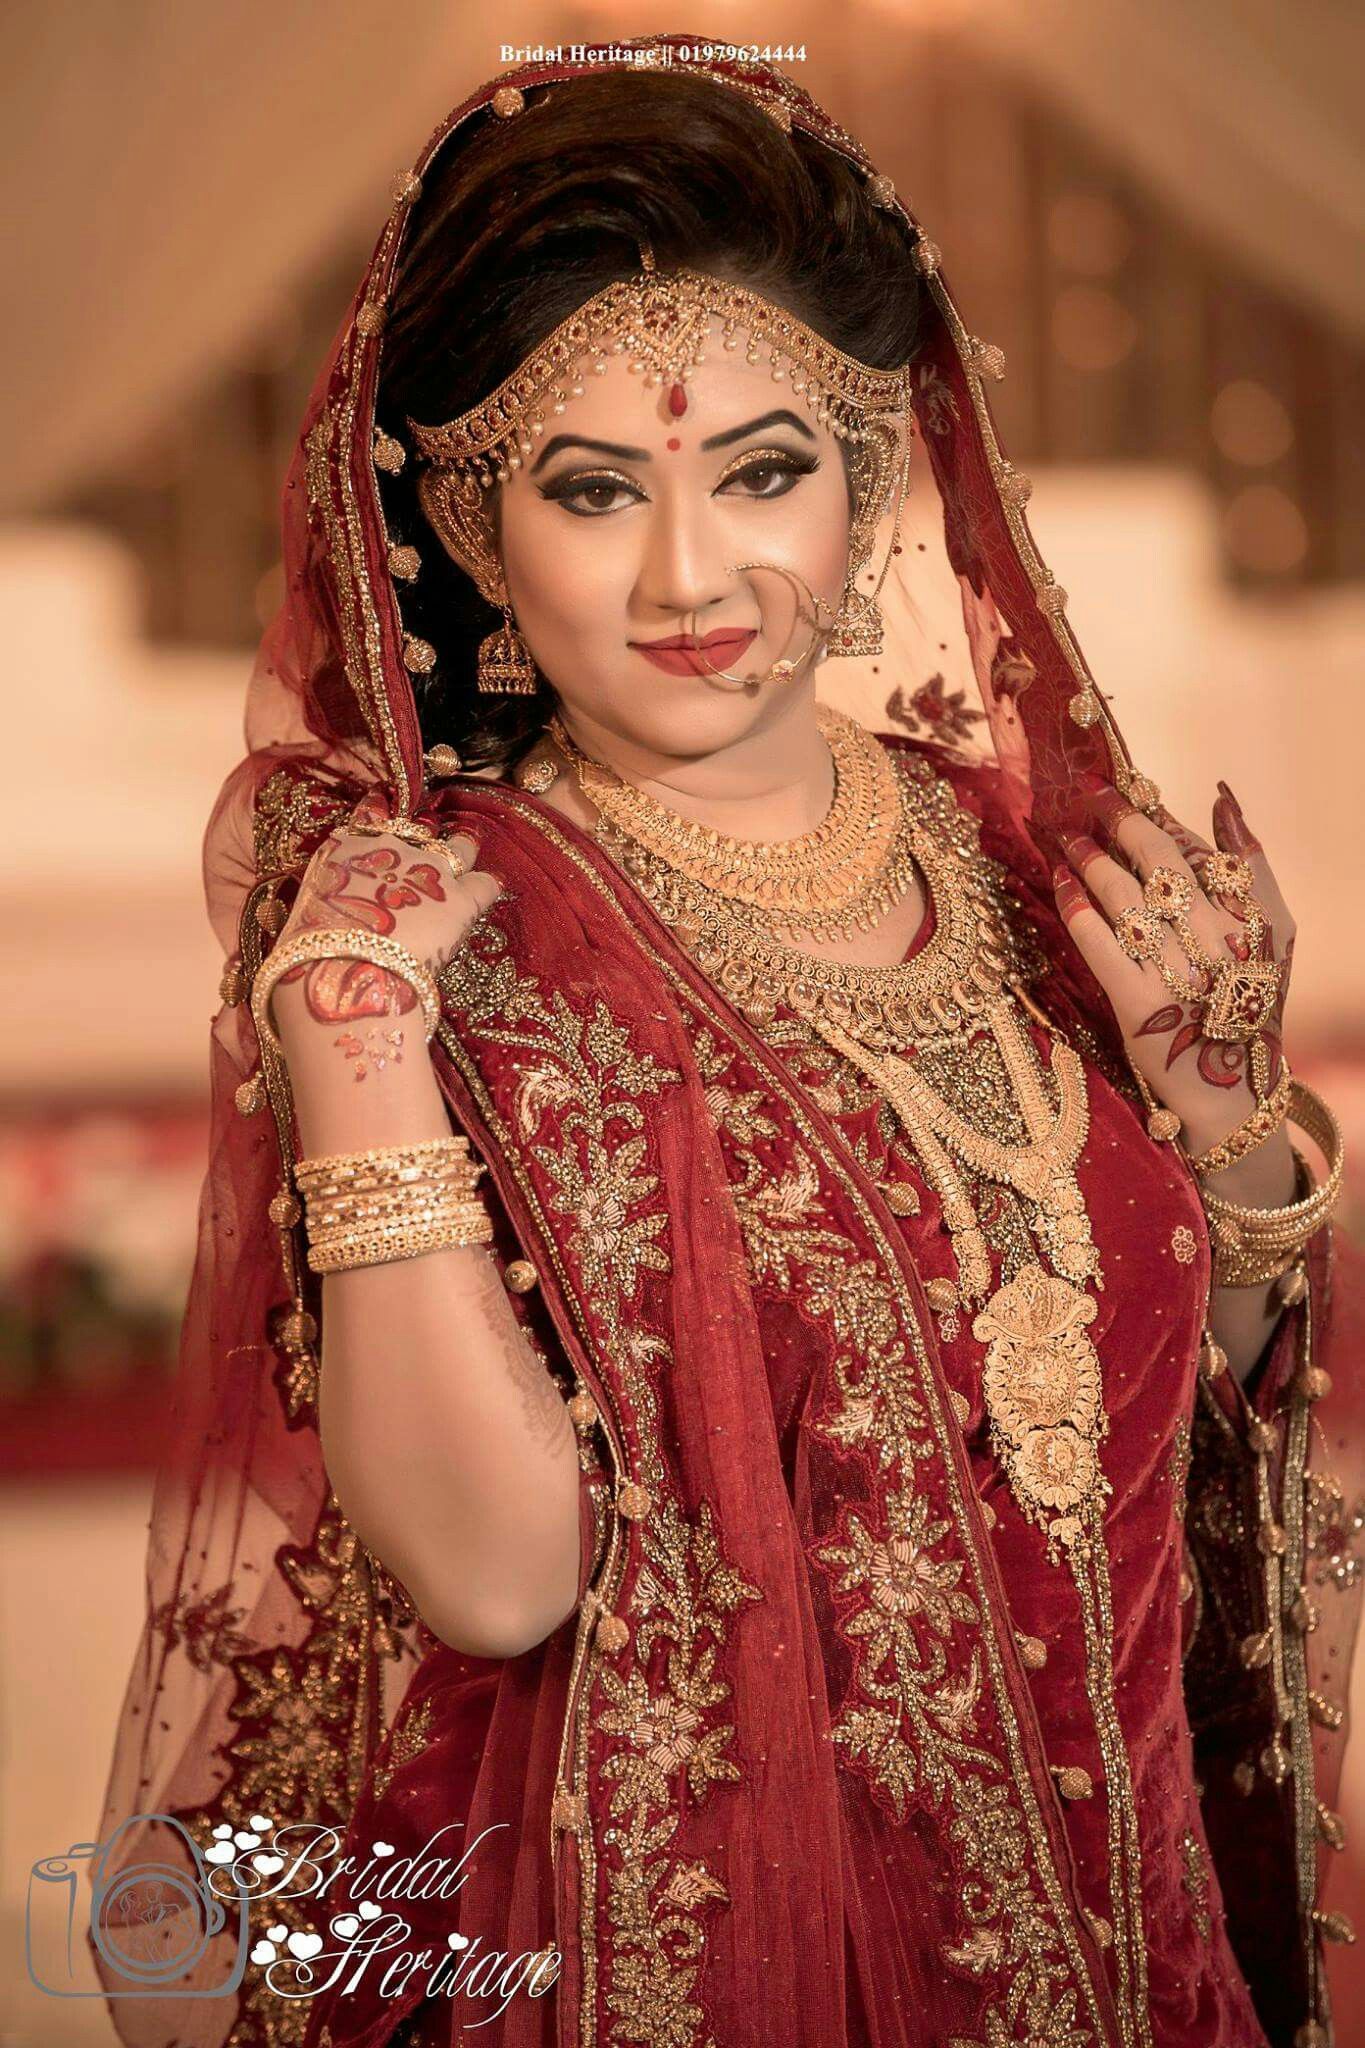 Bangladeshi Bride. Indian wedding bride, Bridal photohoot, Indian wedding photography